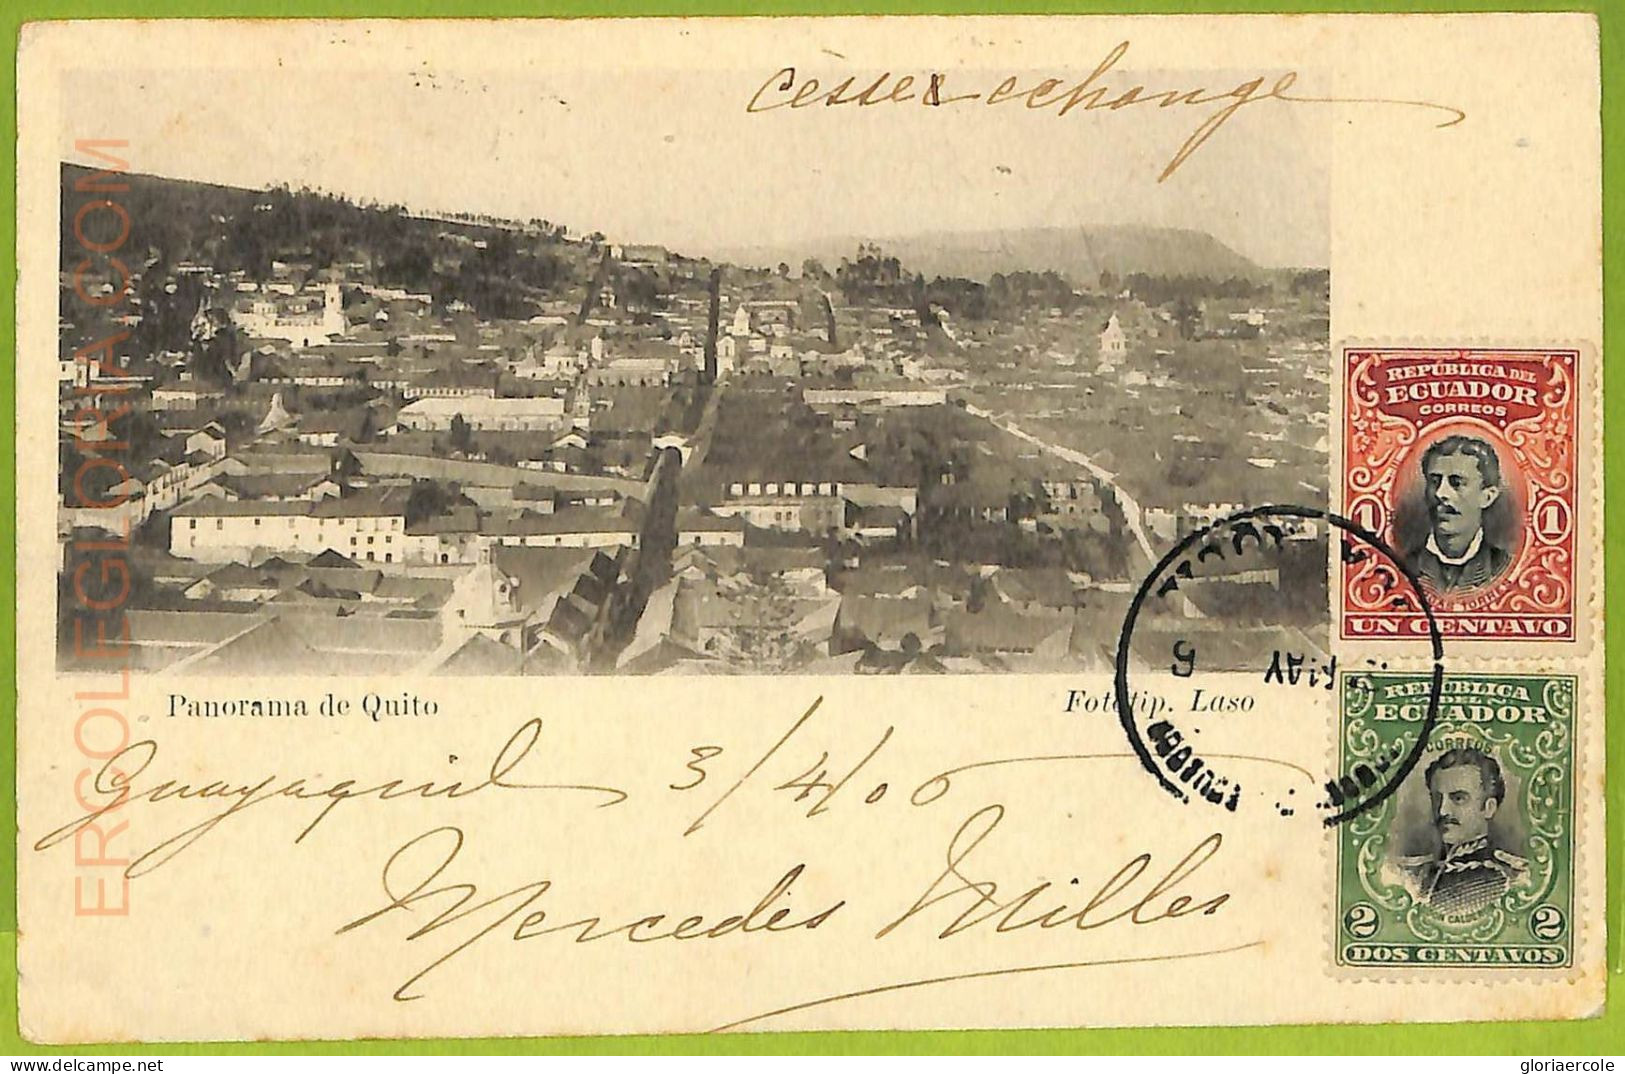 Af2419 - ECUADOR - Vintage Postcard -  Quito - 1905 - Equateur